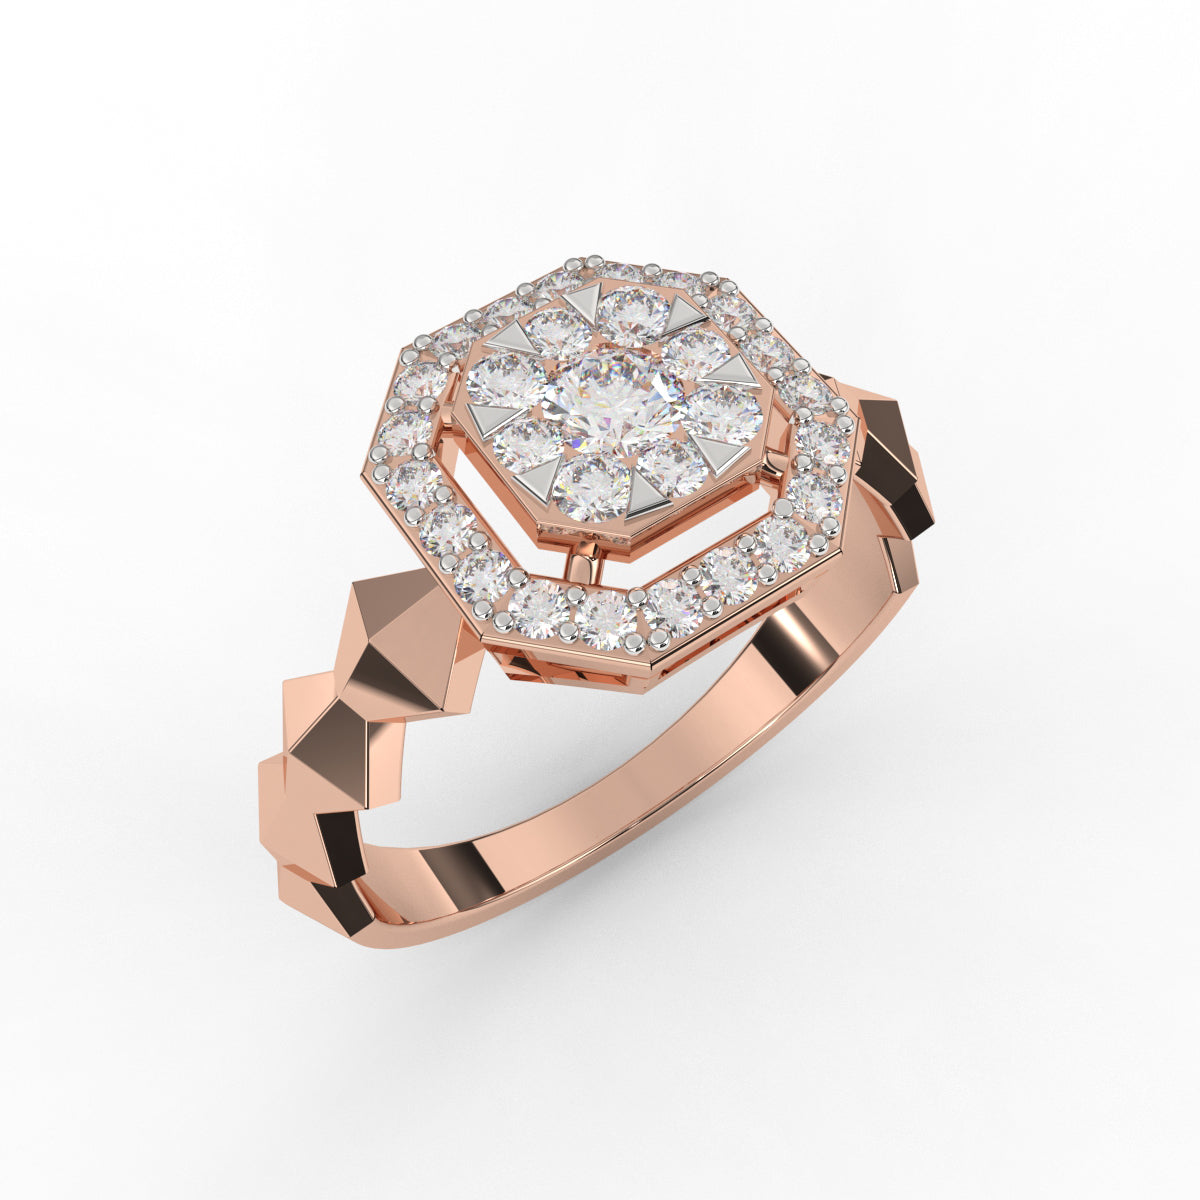 Shop Exquisite Grand Cube Rings Online at DiAi Designs